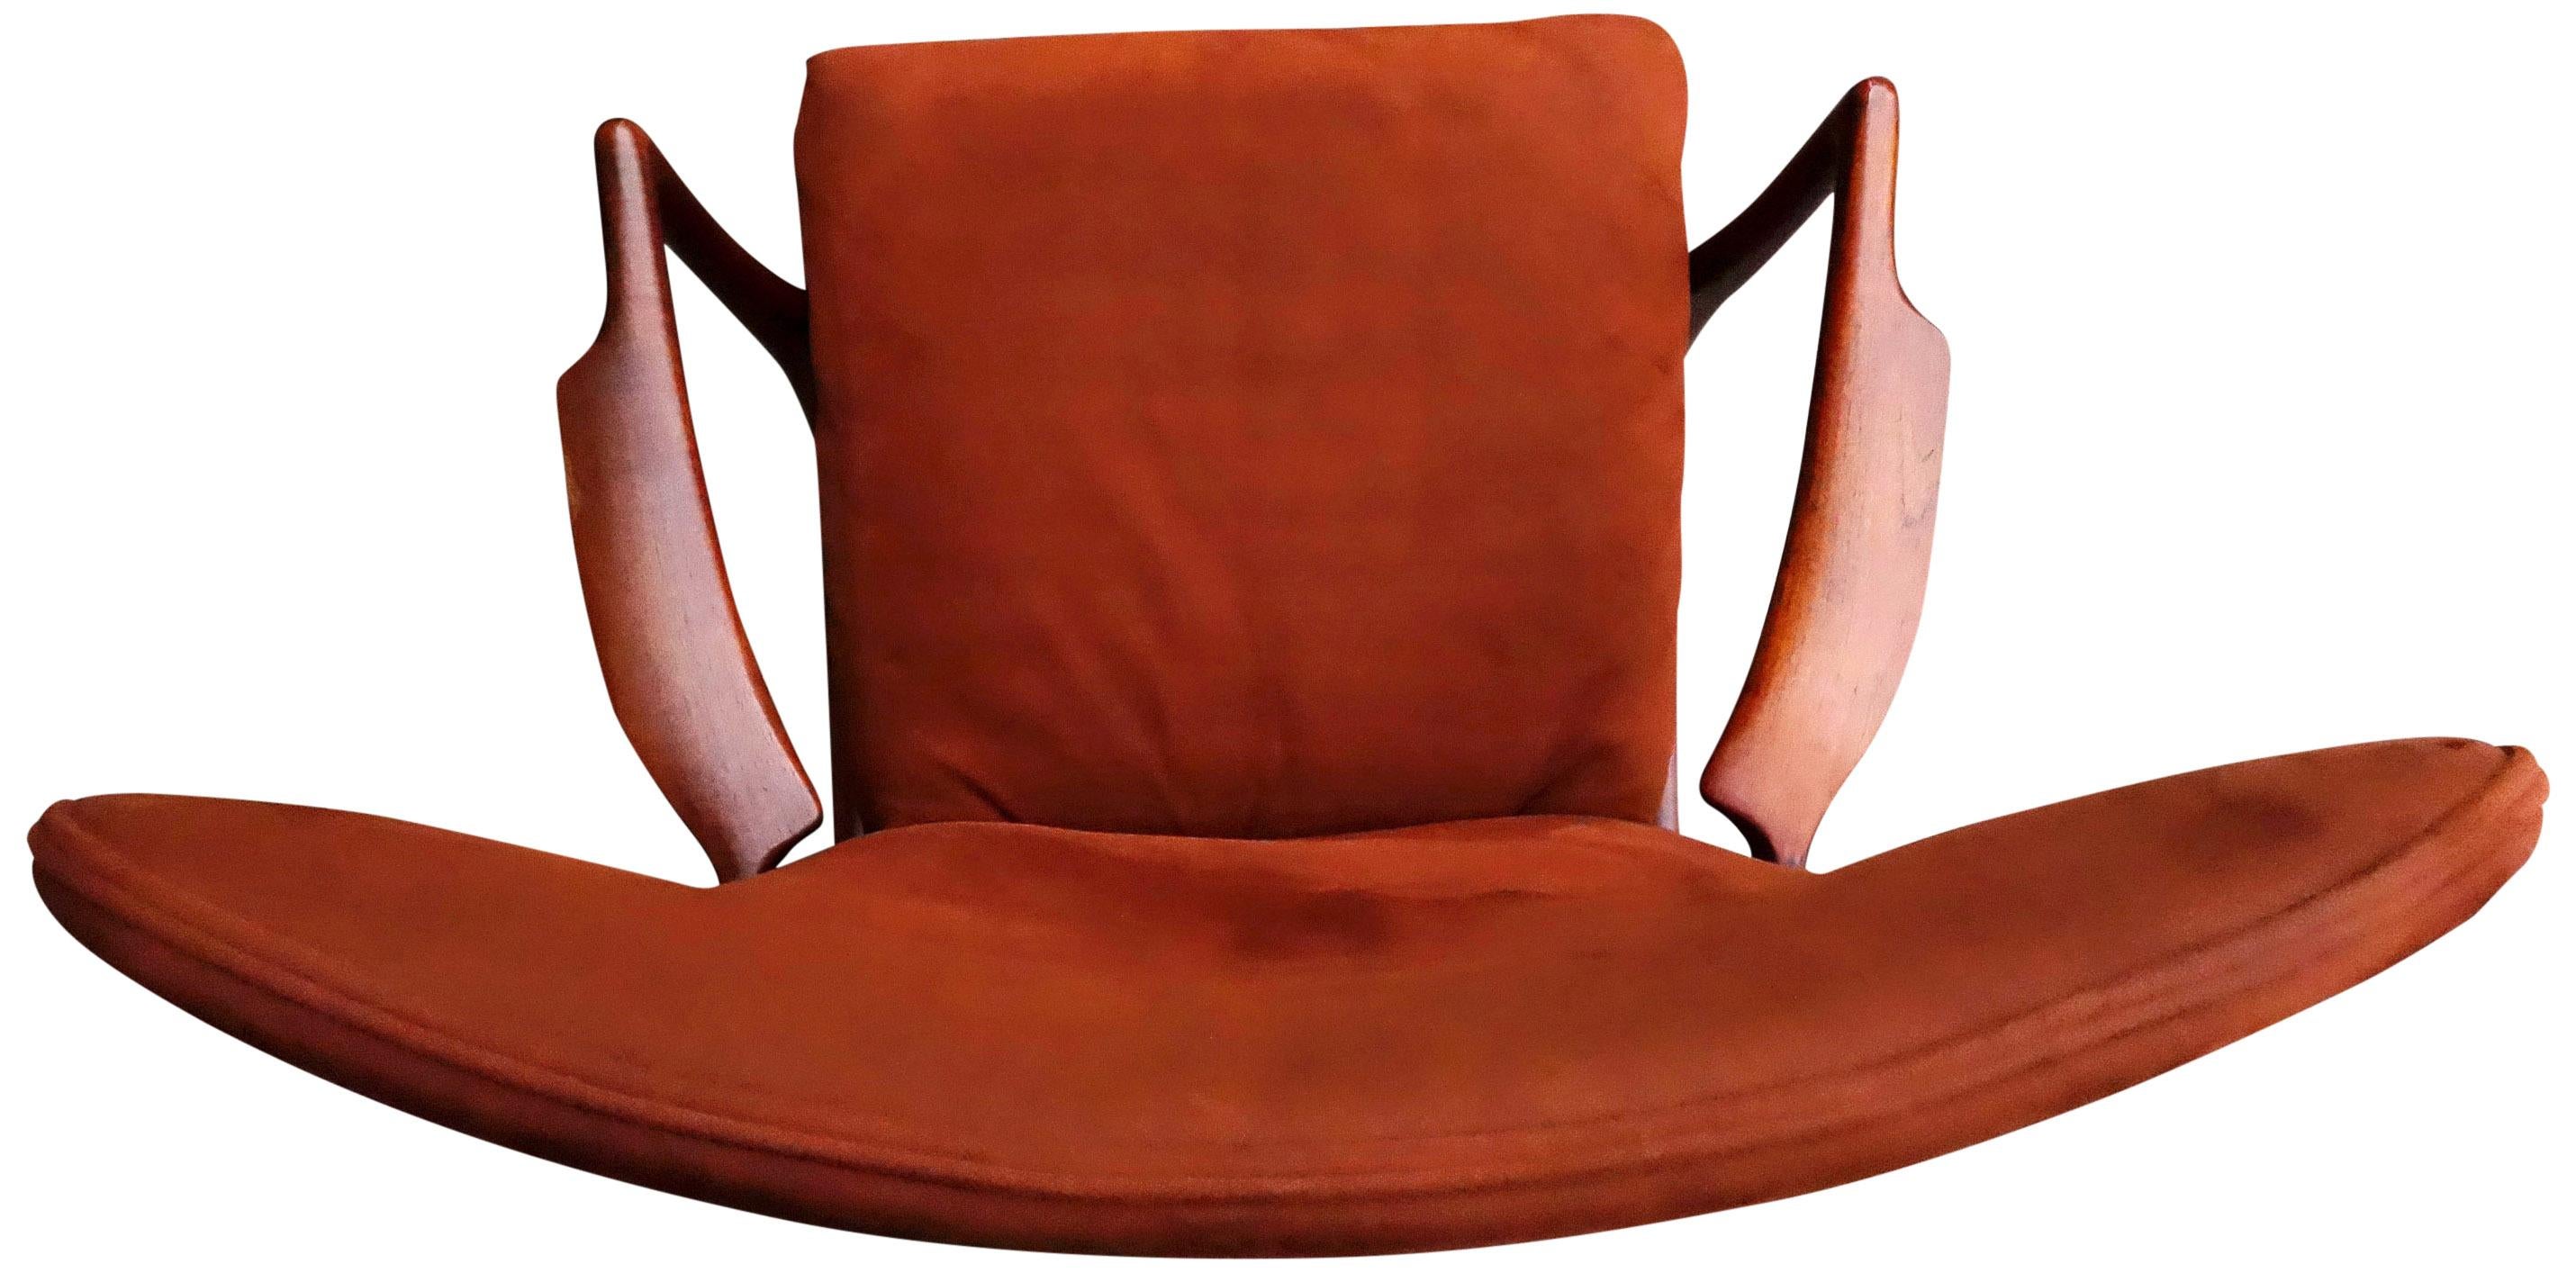 Danish Superb Midcentury Hans Wegner Lounge Chair For Sale